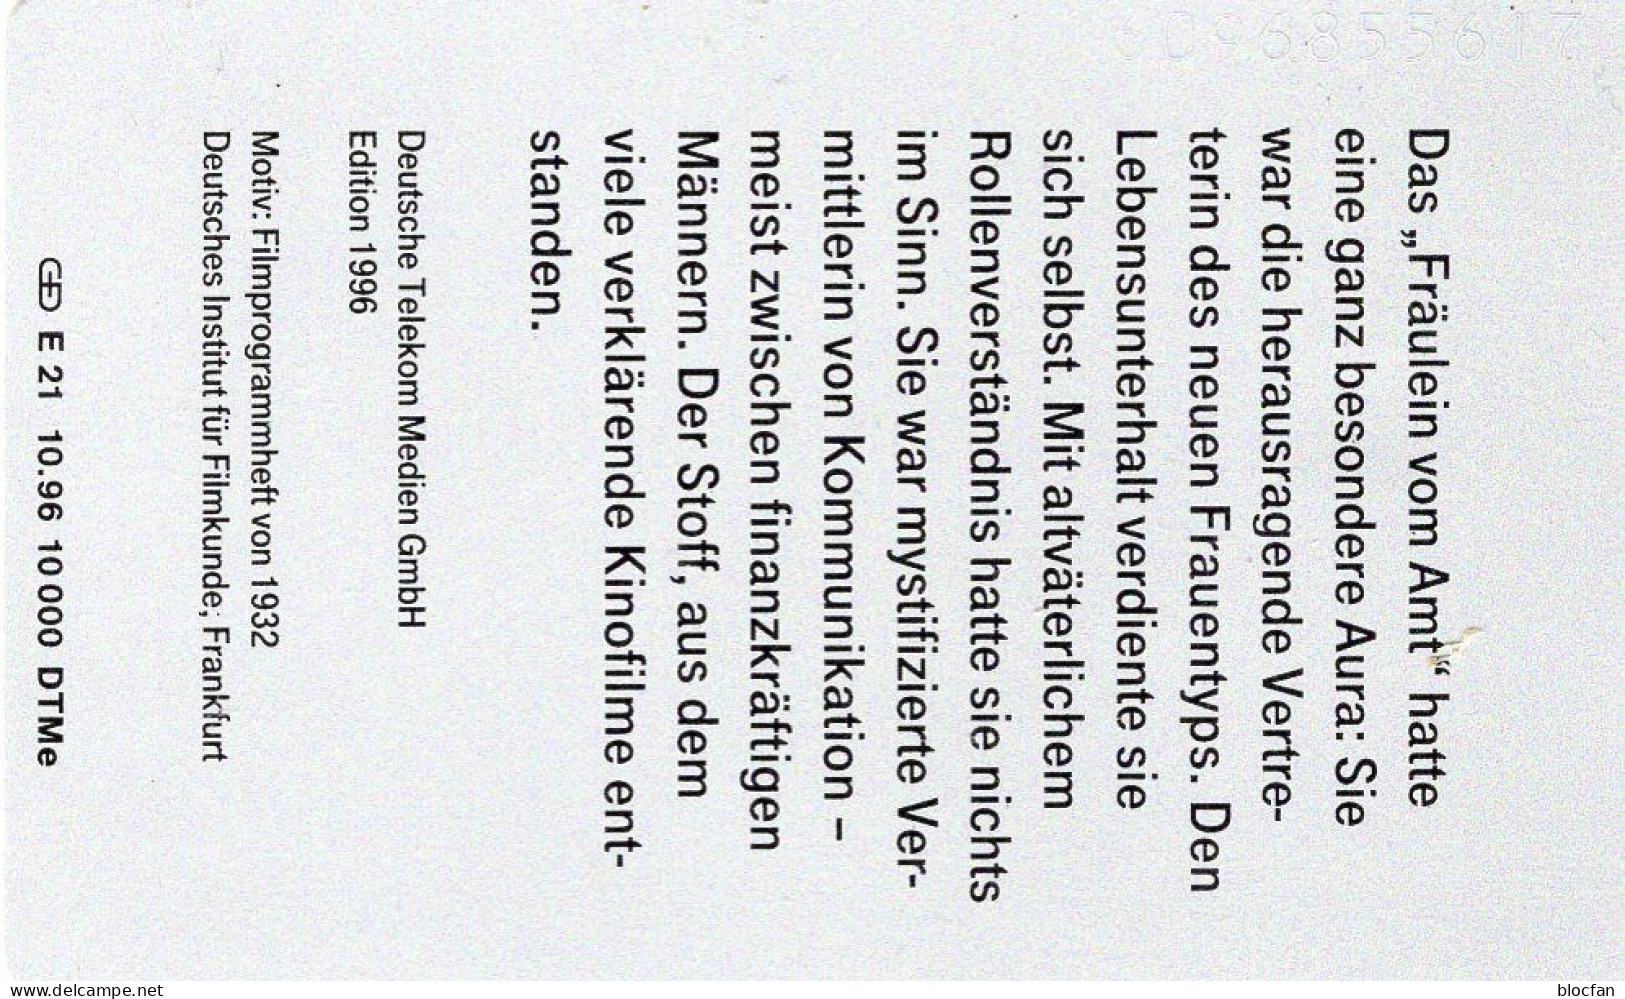 Telegrafen-Amt TK E21/1996 10.000 Expl.** 30€ Edition 6 Vermittlung In Berlin TC History Communication Phonecard Germany - E-Series : D. Postreklame Edition